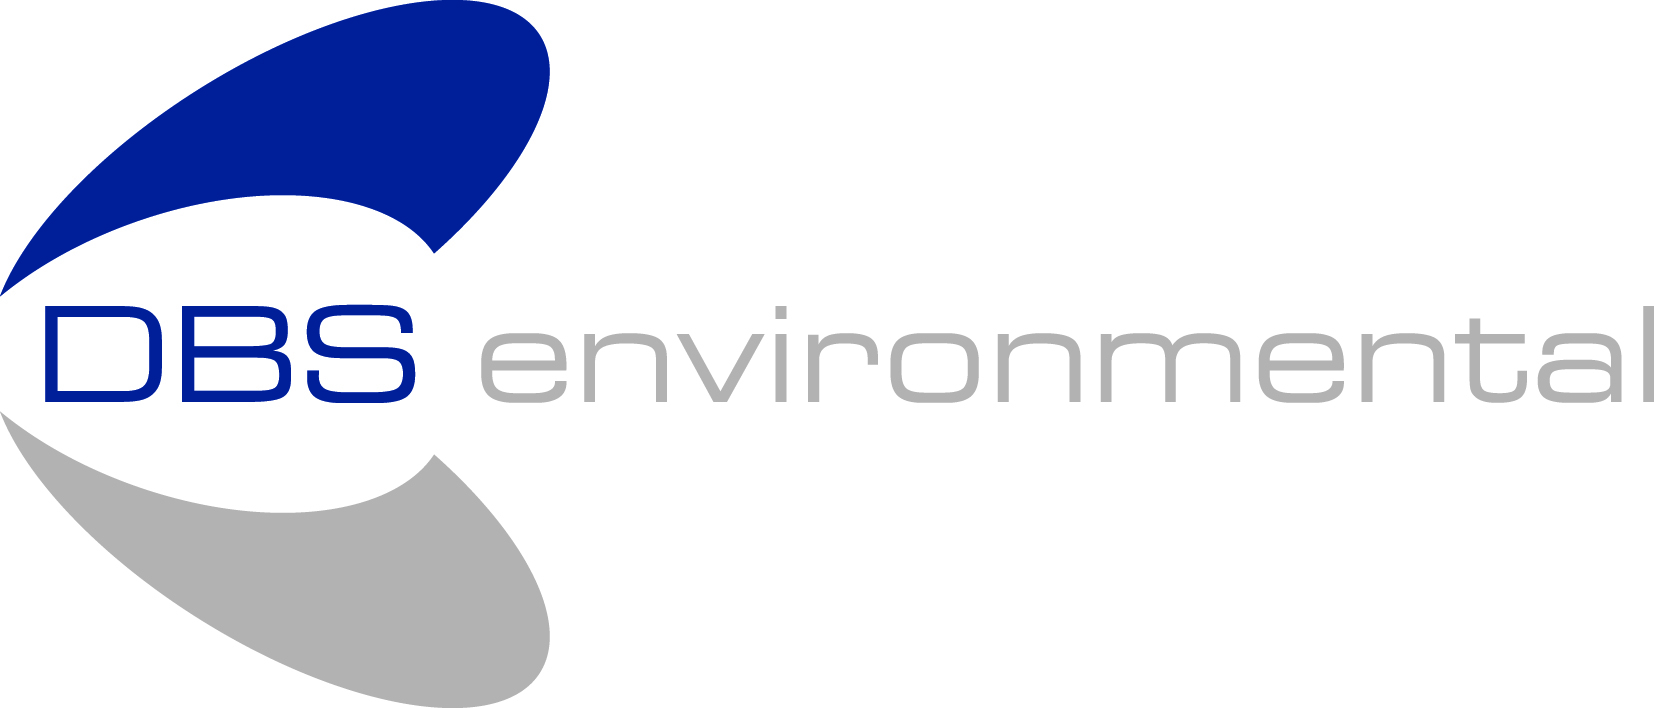 DBS Environmental Limited